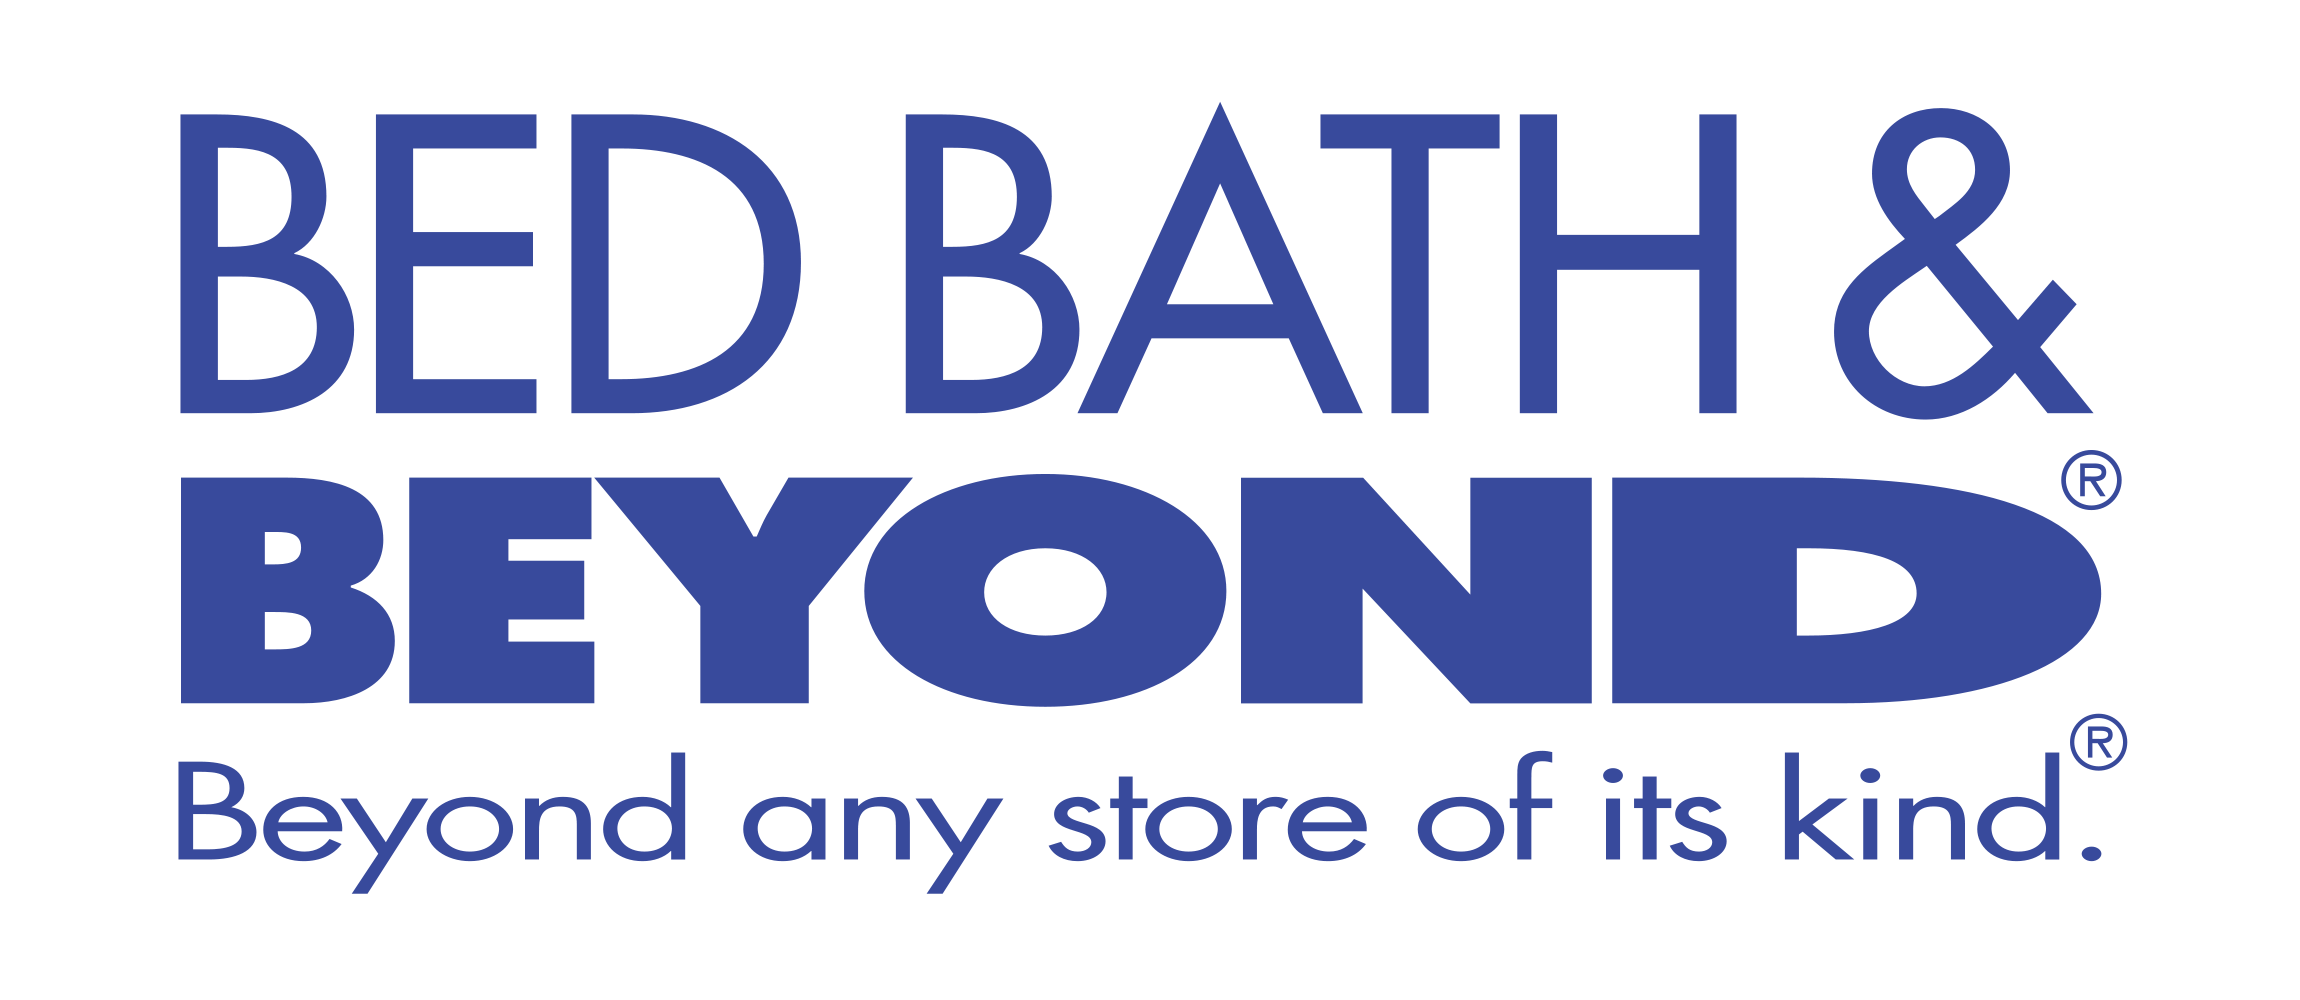 Bedbathandbeyond Logo - Bed Bath and Beyond Logo, Bed Bath and Beyond Symbol, Meaning ...